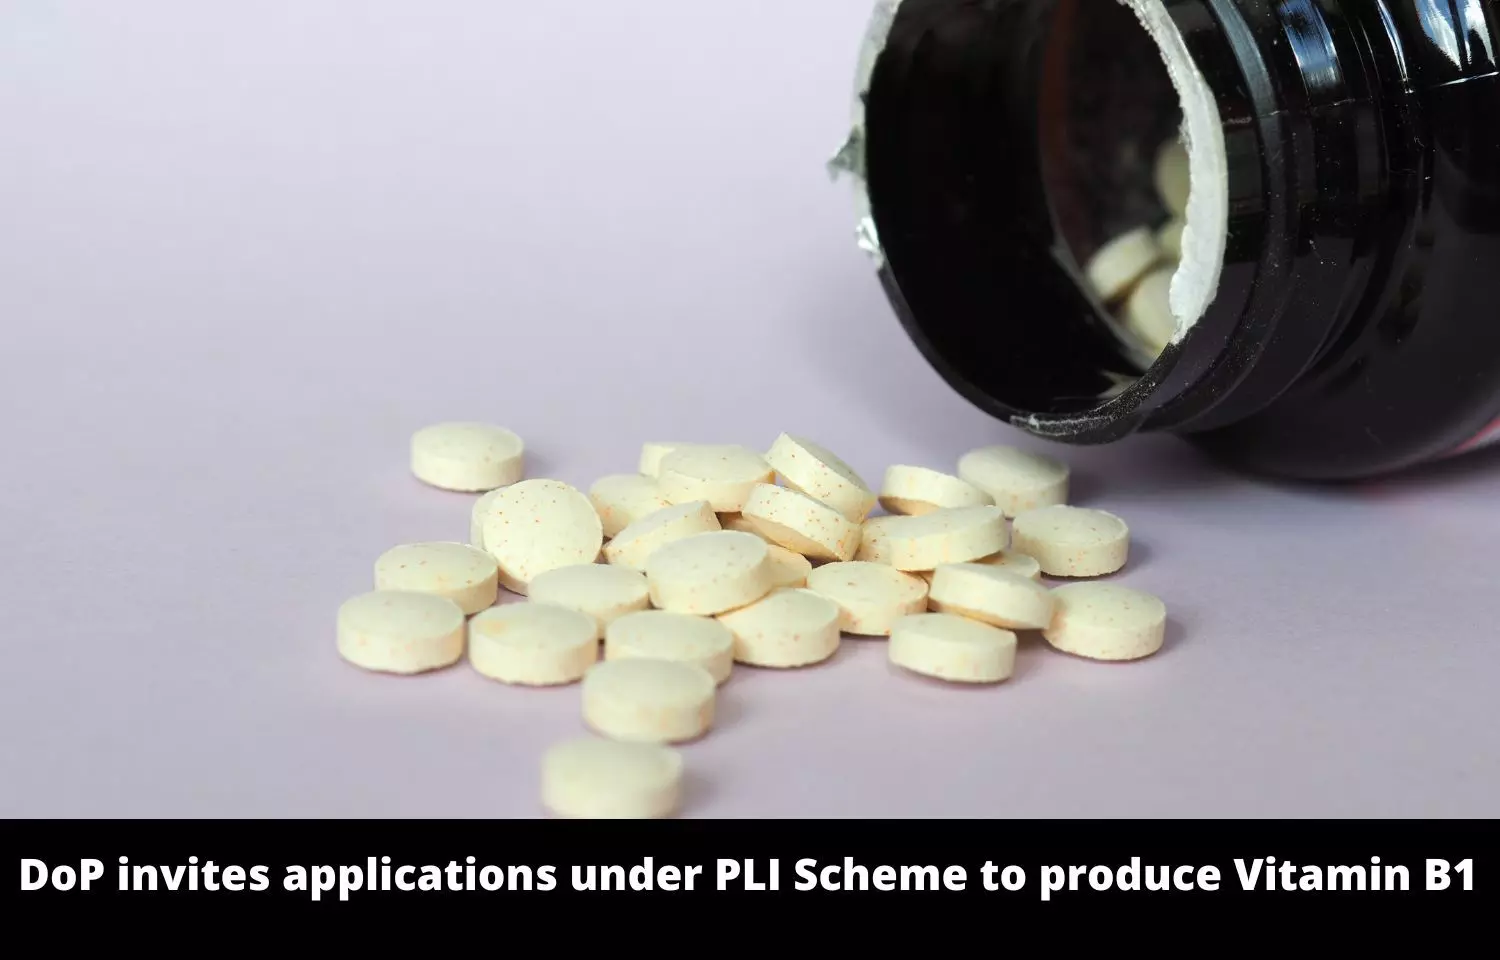 Department of Pharmaceuticals invites applications under PLI scheme to produce Vitamin B1